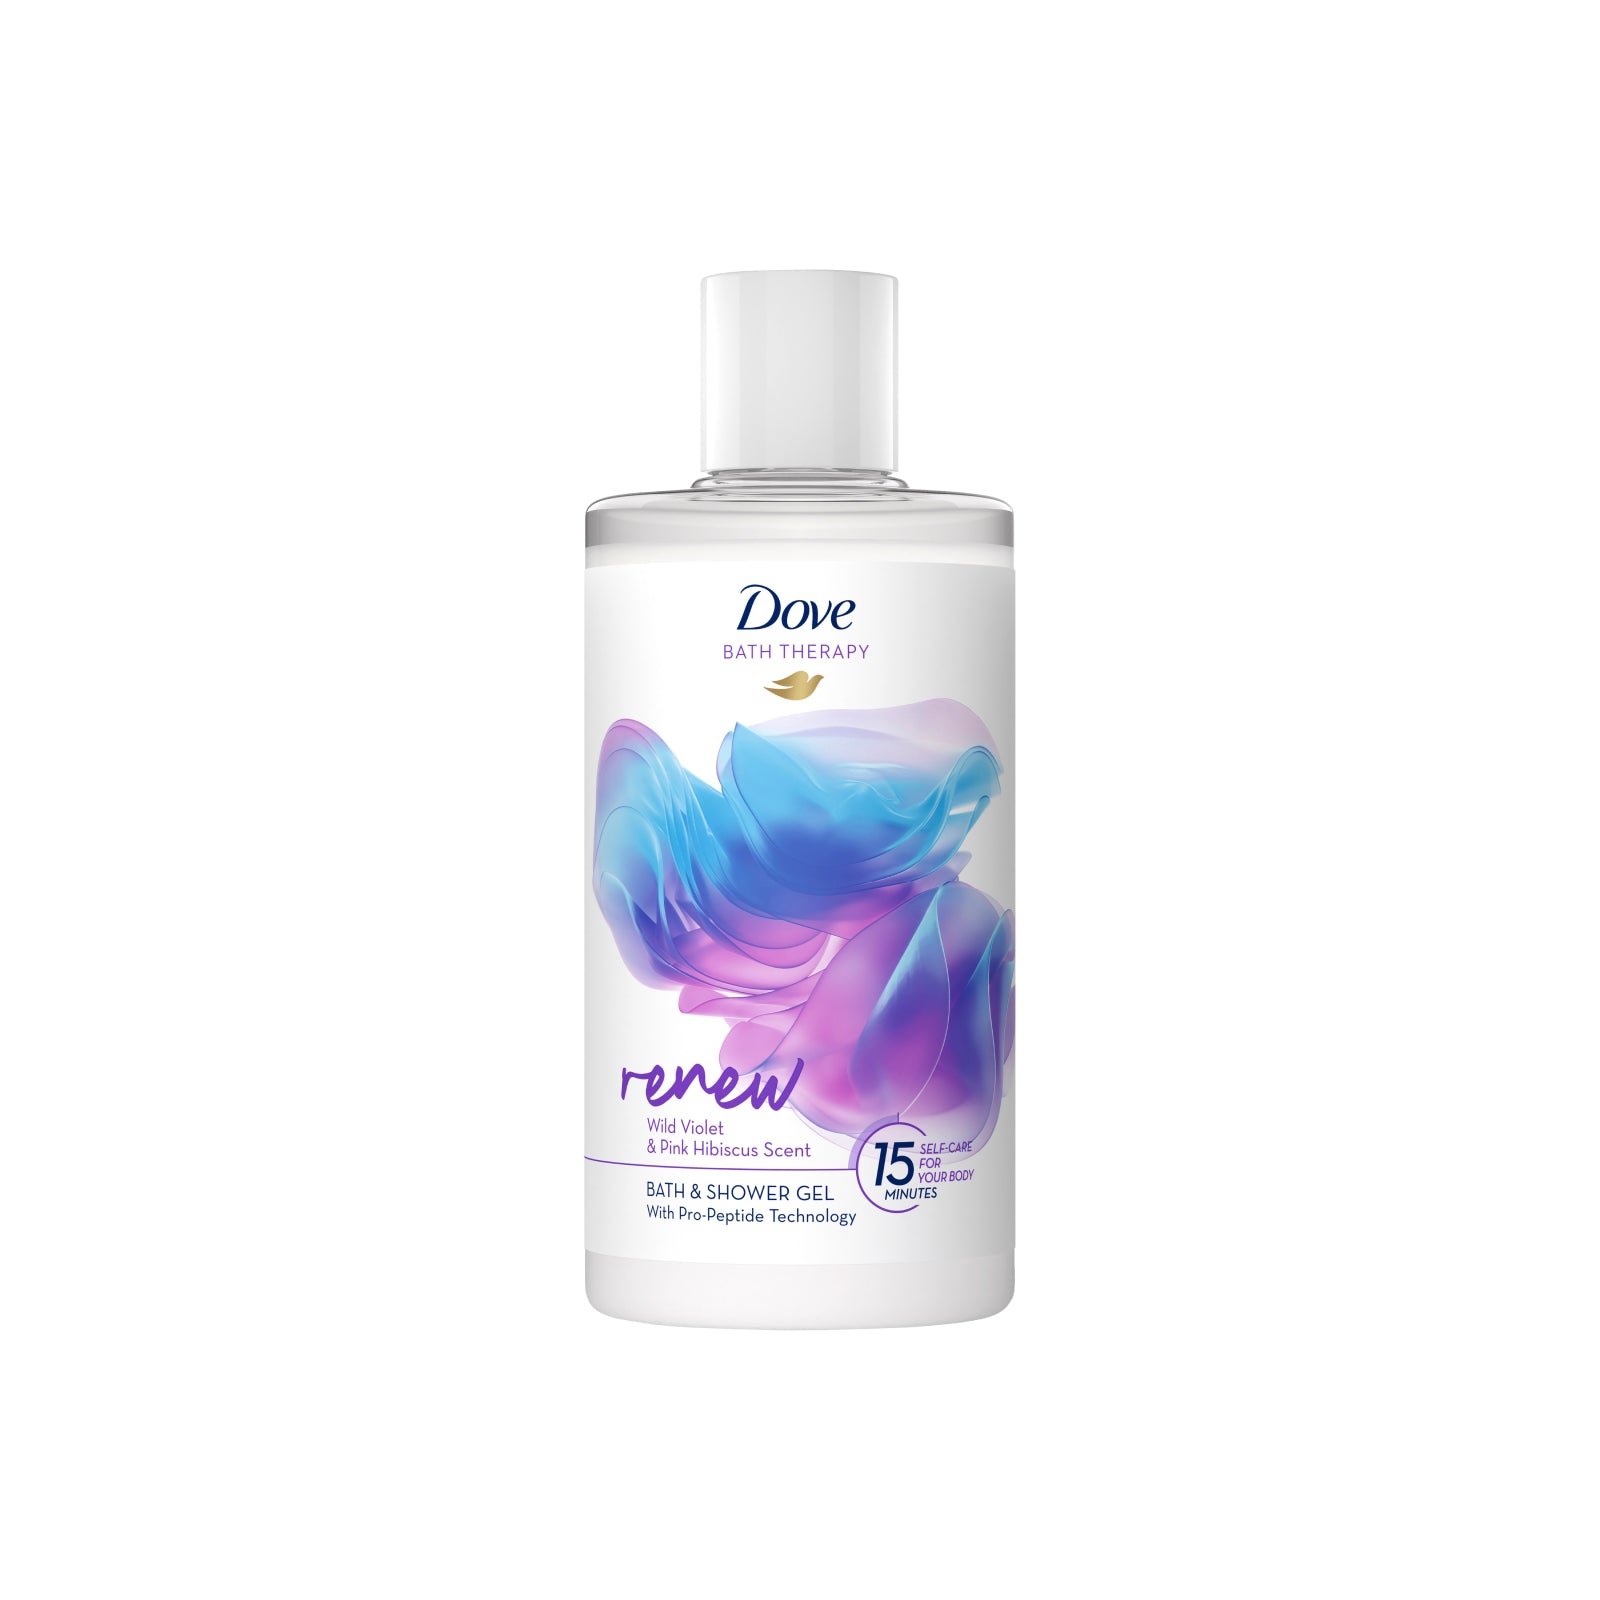 Dove Bath Therapy Bad & Duschgel Renew 400 ml